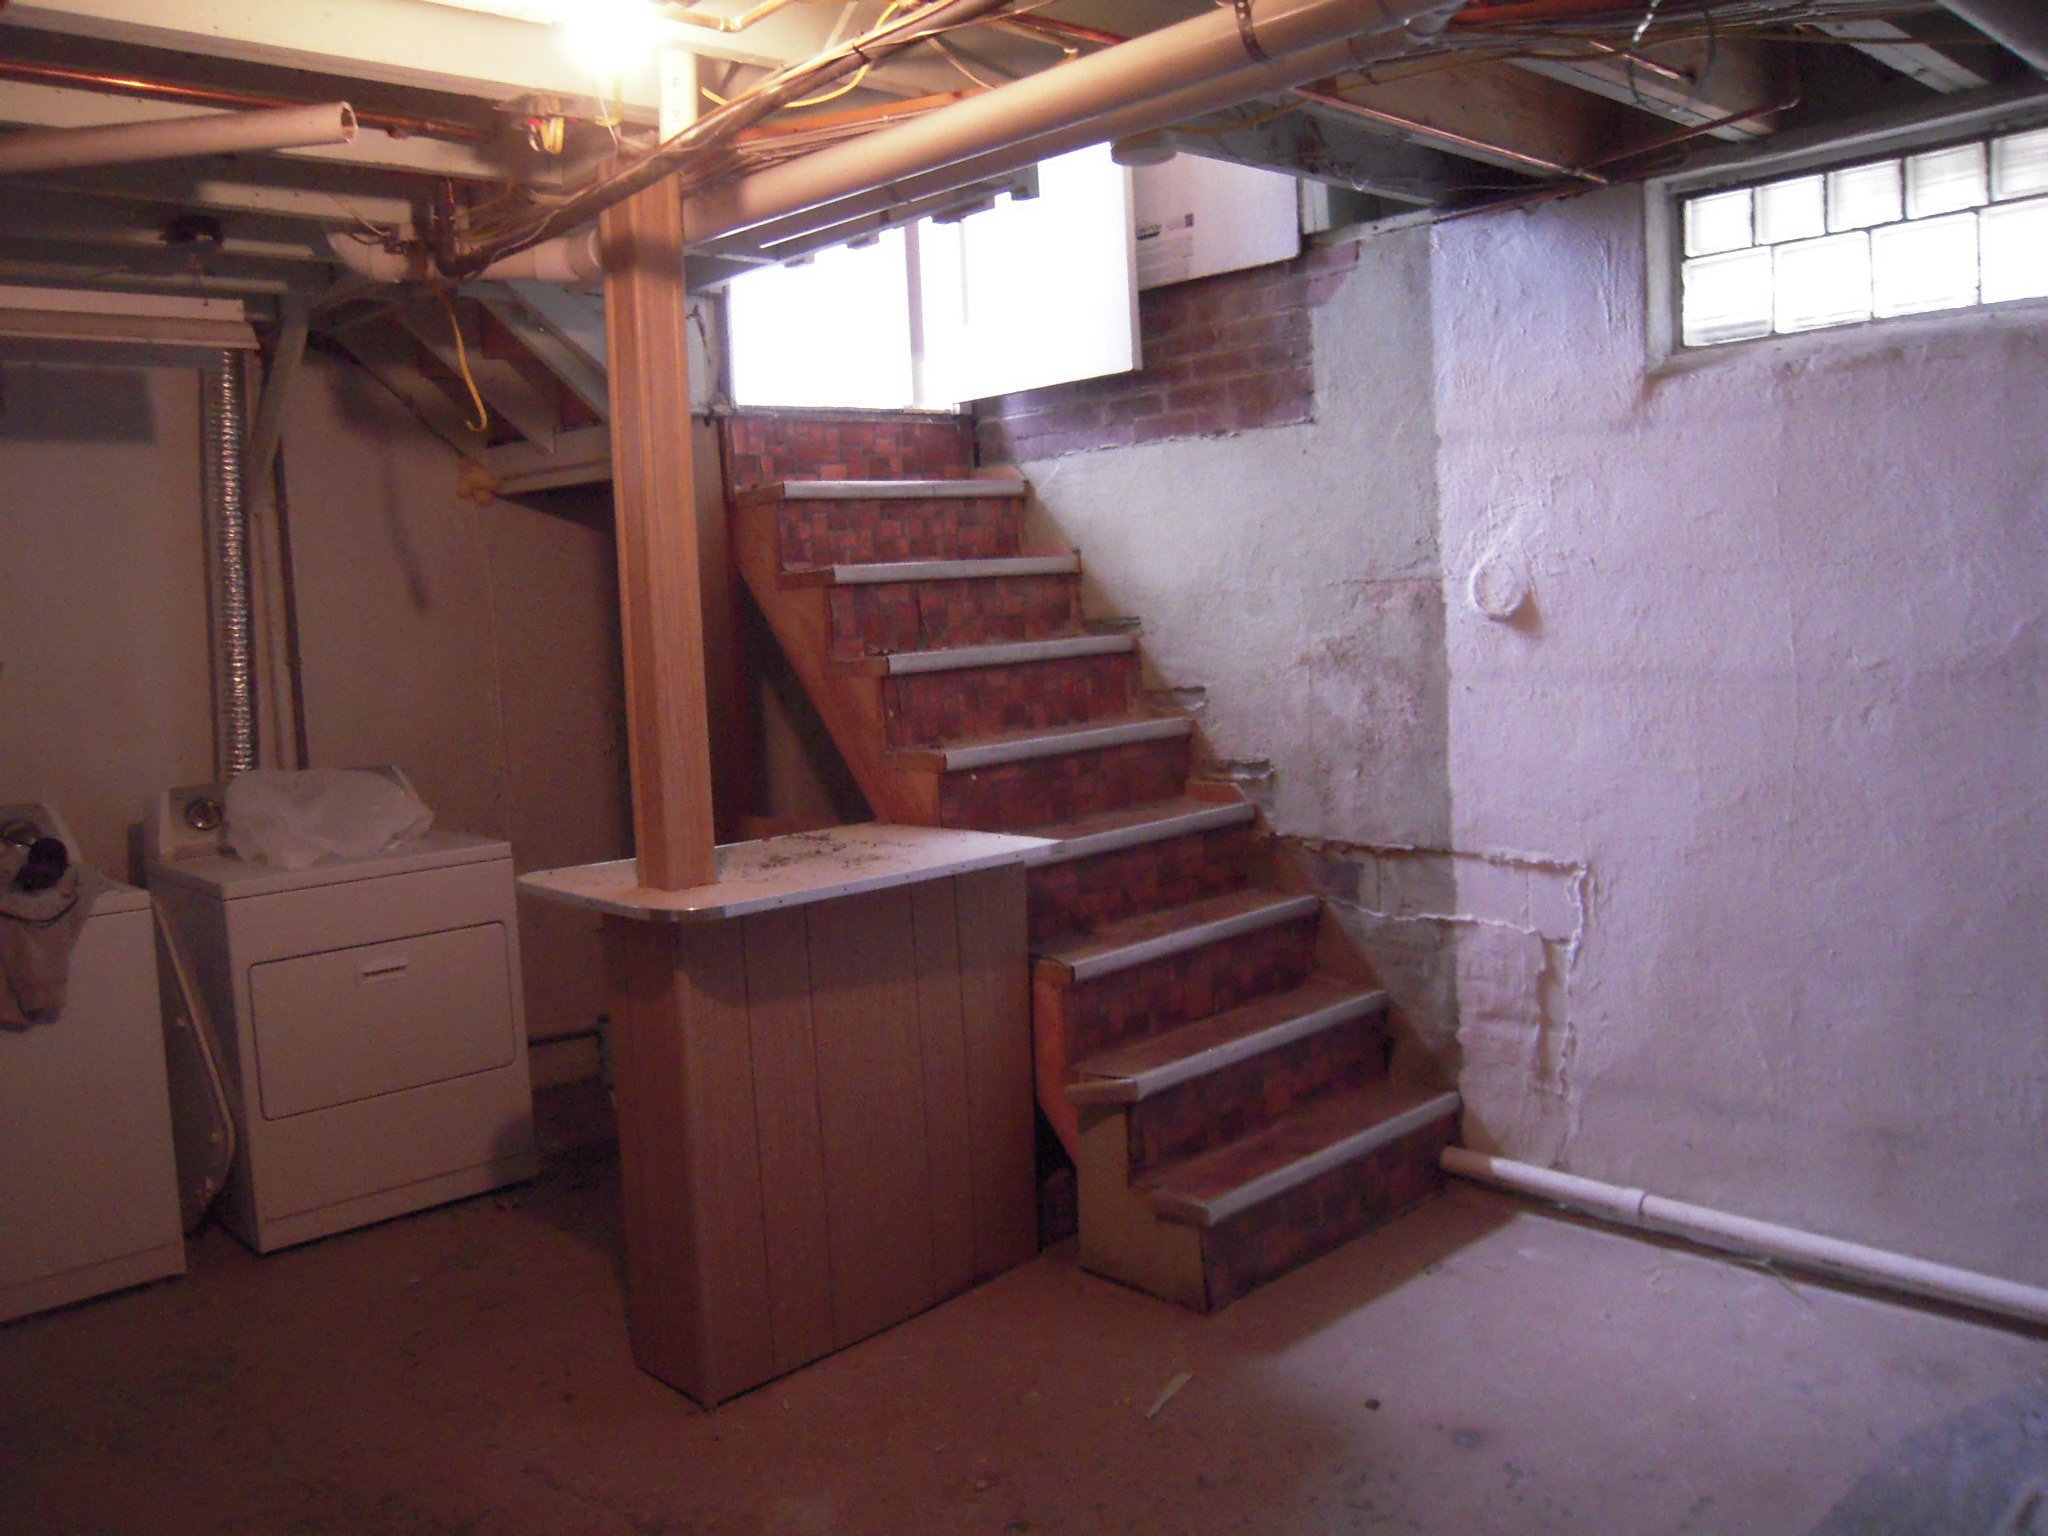 1-basement-stair.jpg